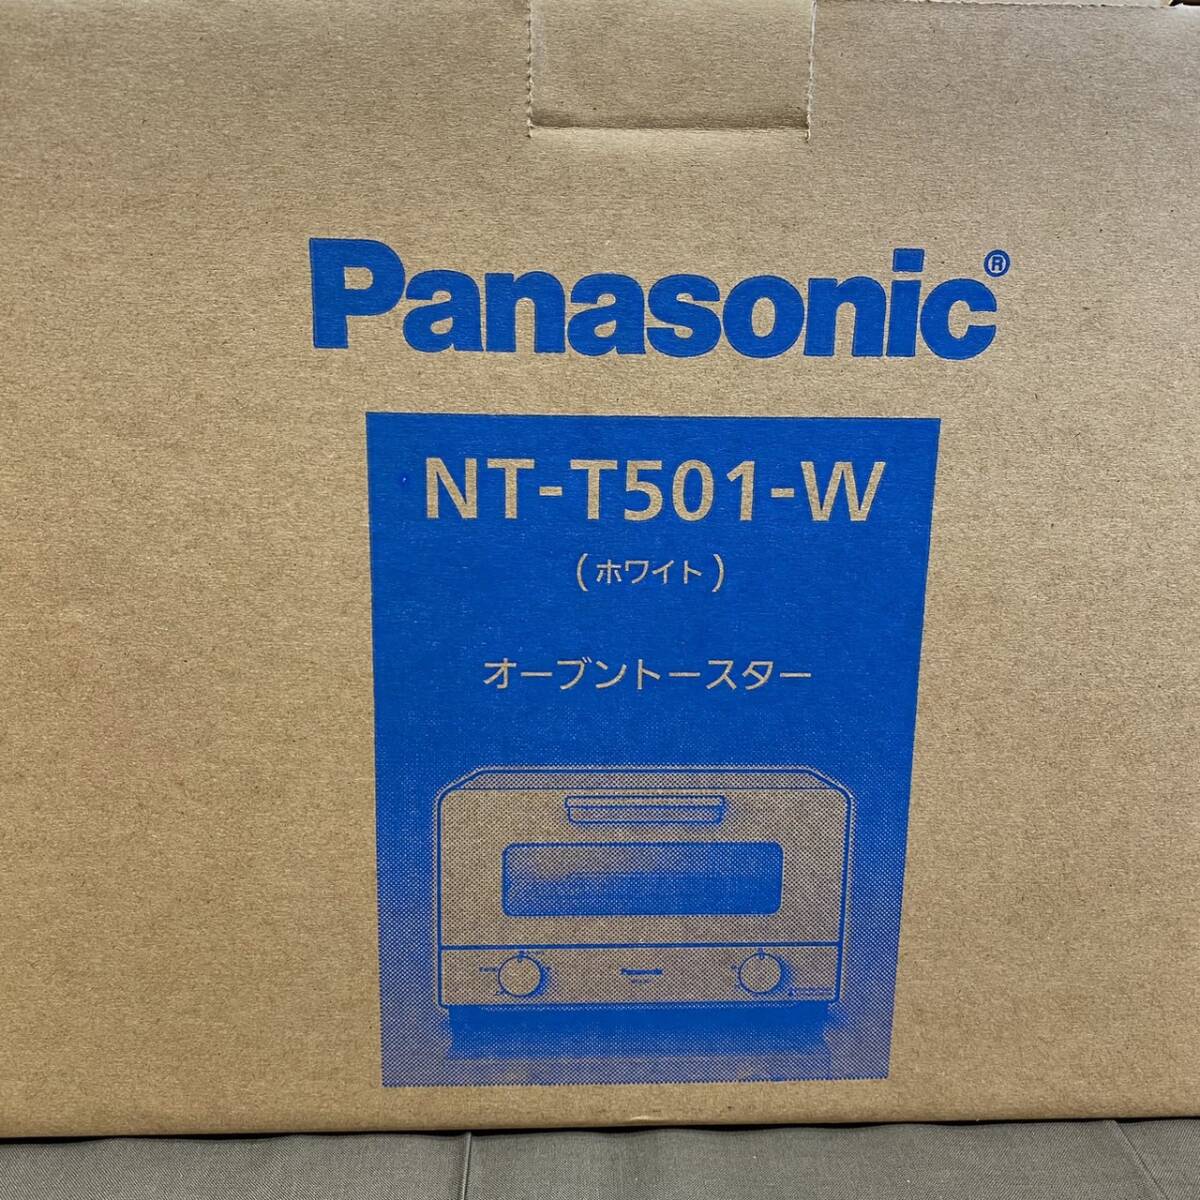 [MH-7031] new goods unused goods Panasonic Panasonic NT-T501-W oven toaster white 